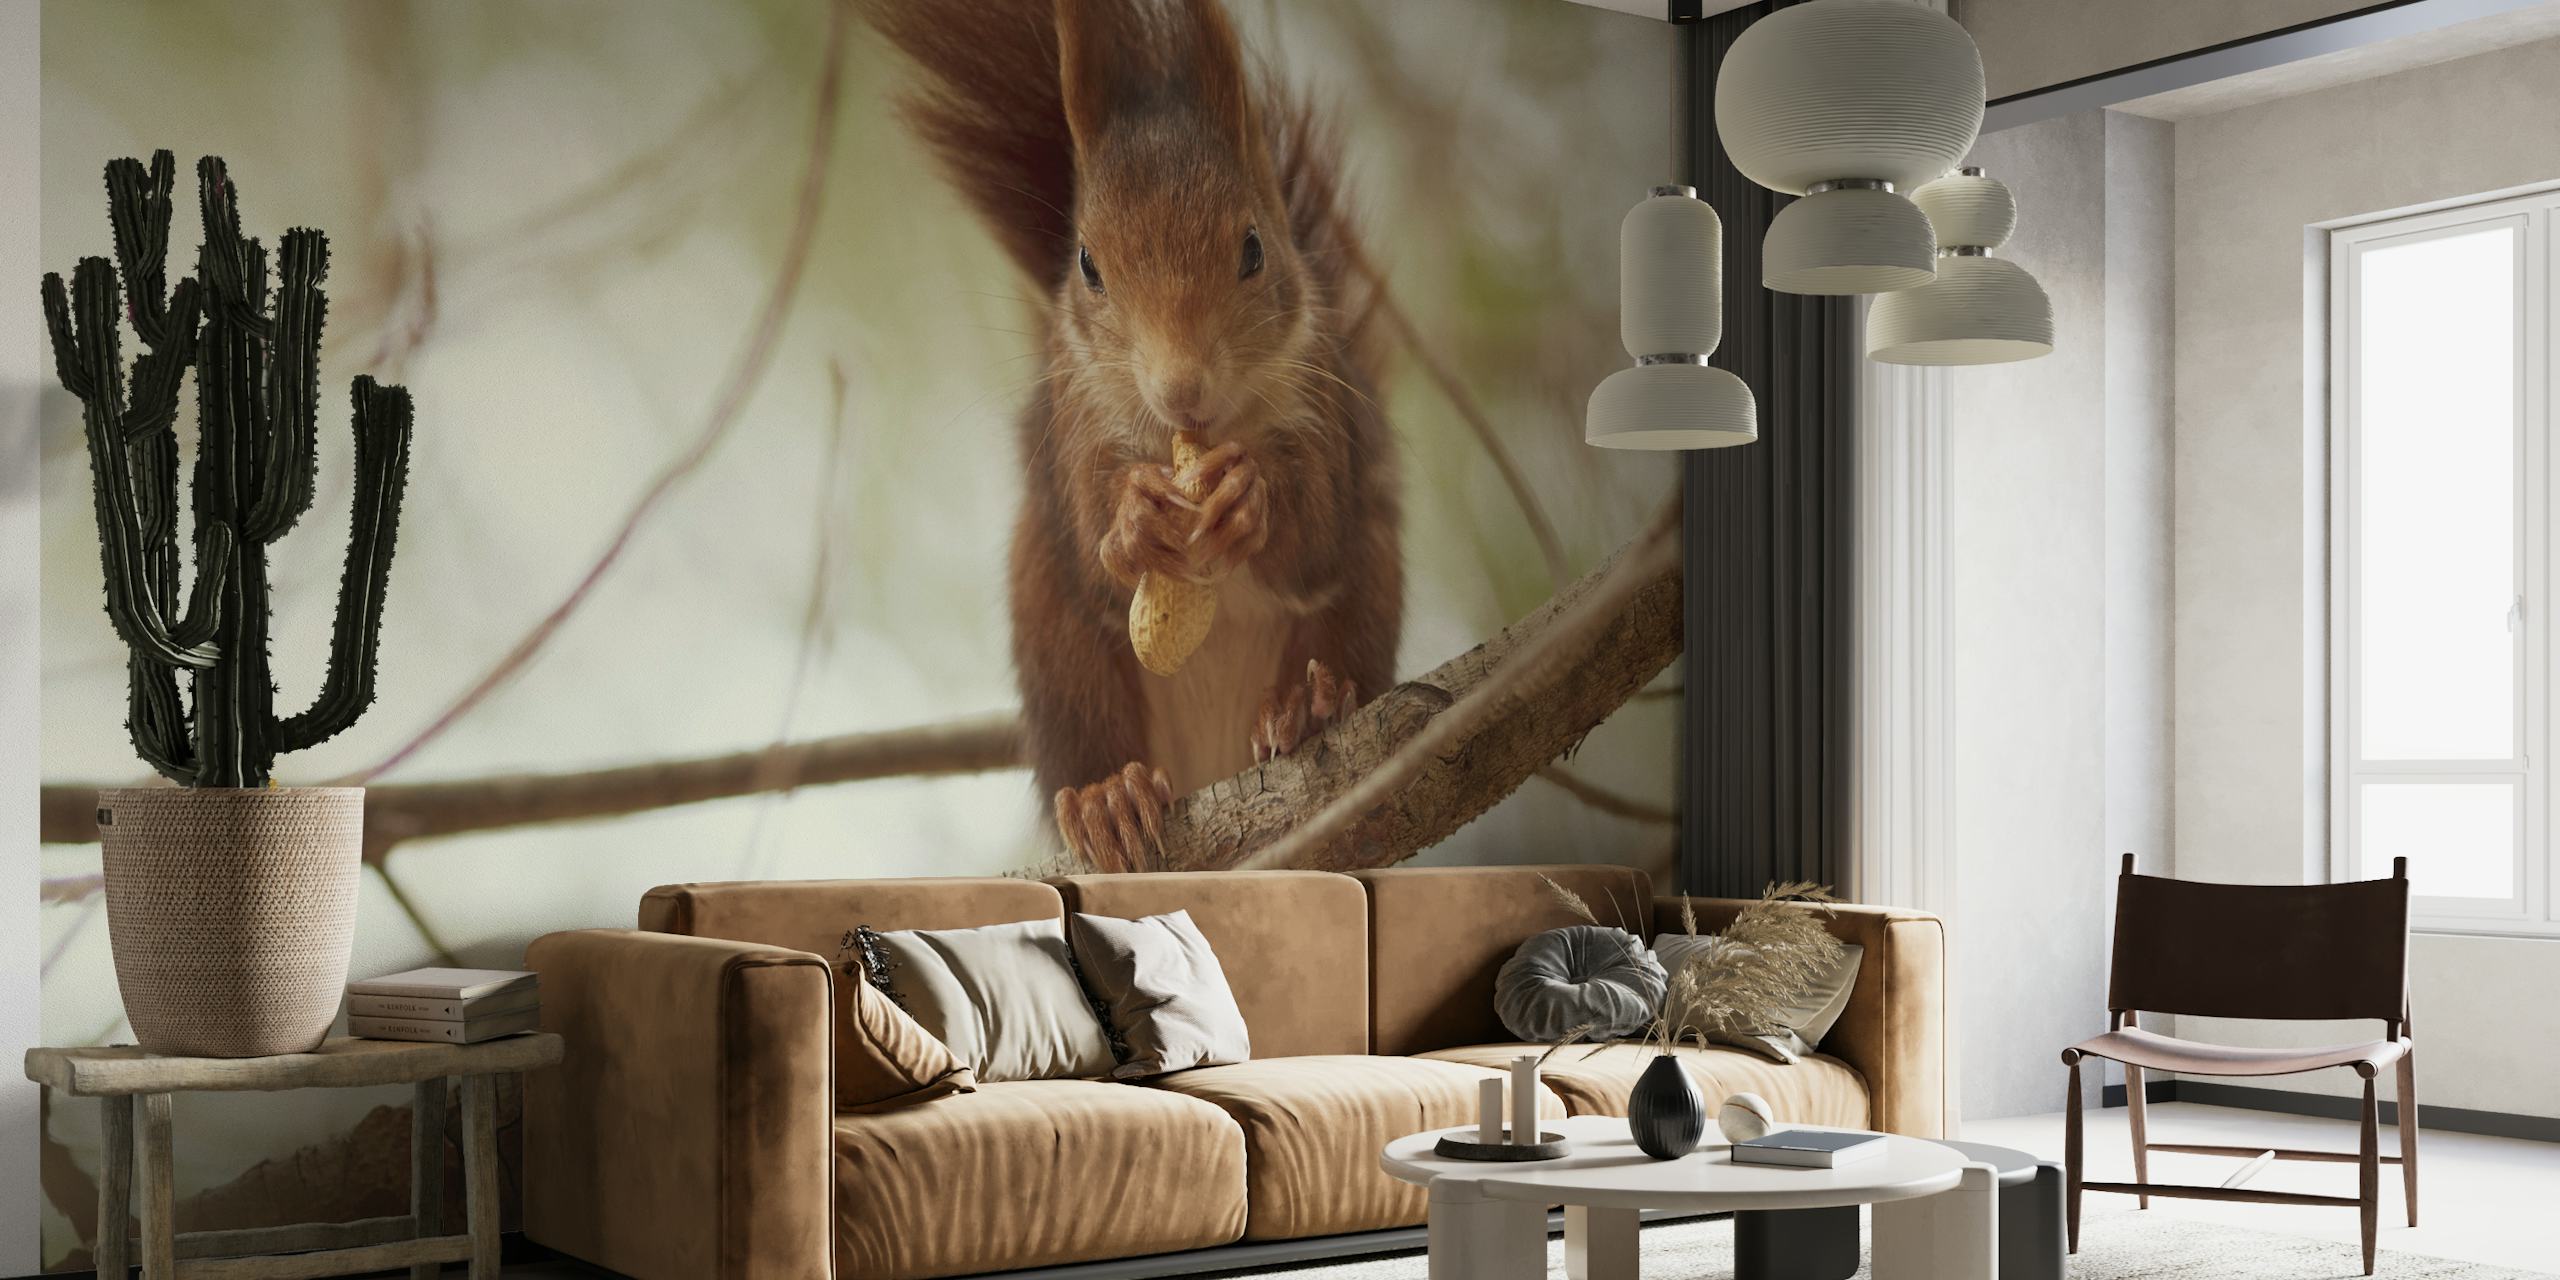 Spanish squirrel wallpaper